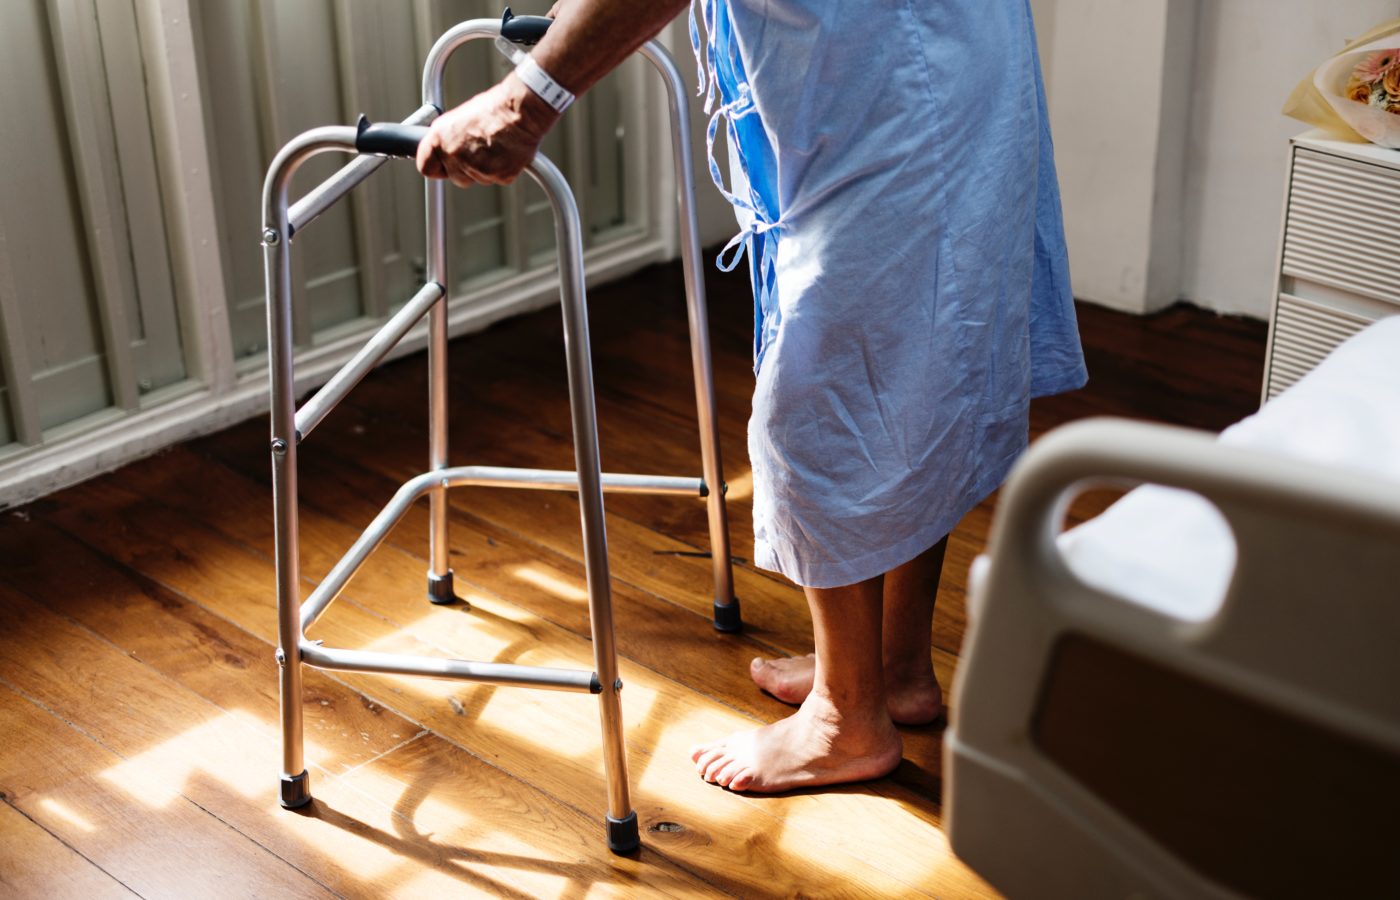 Elderly patient hospital bed and walker